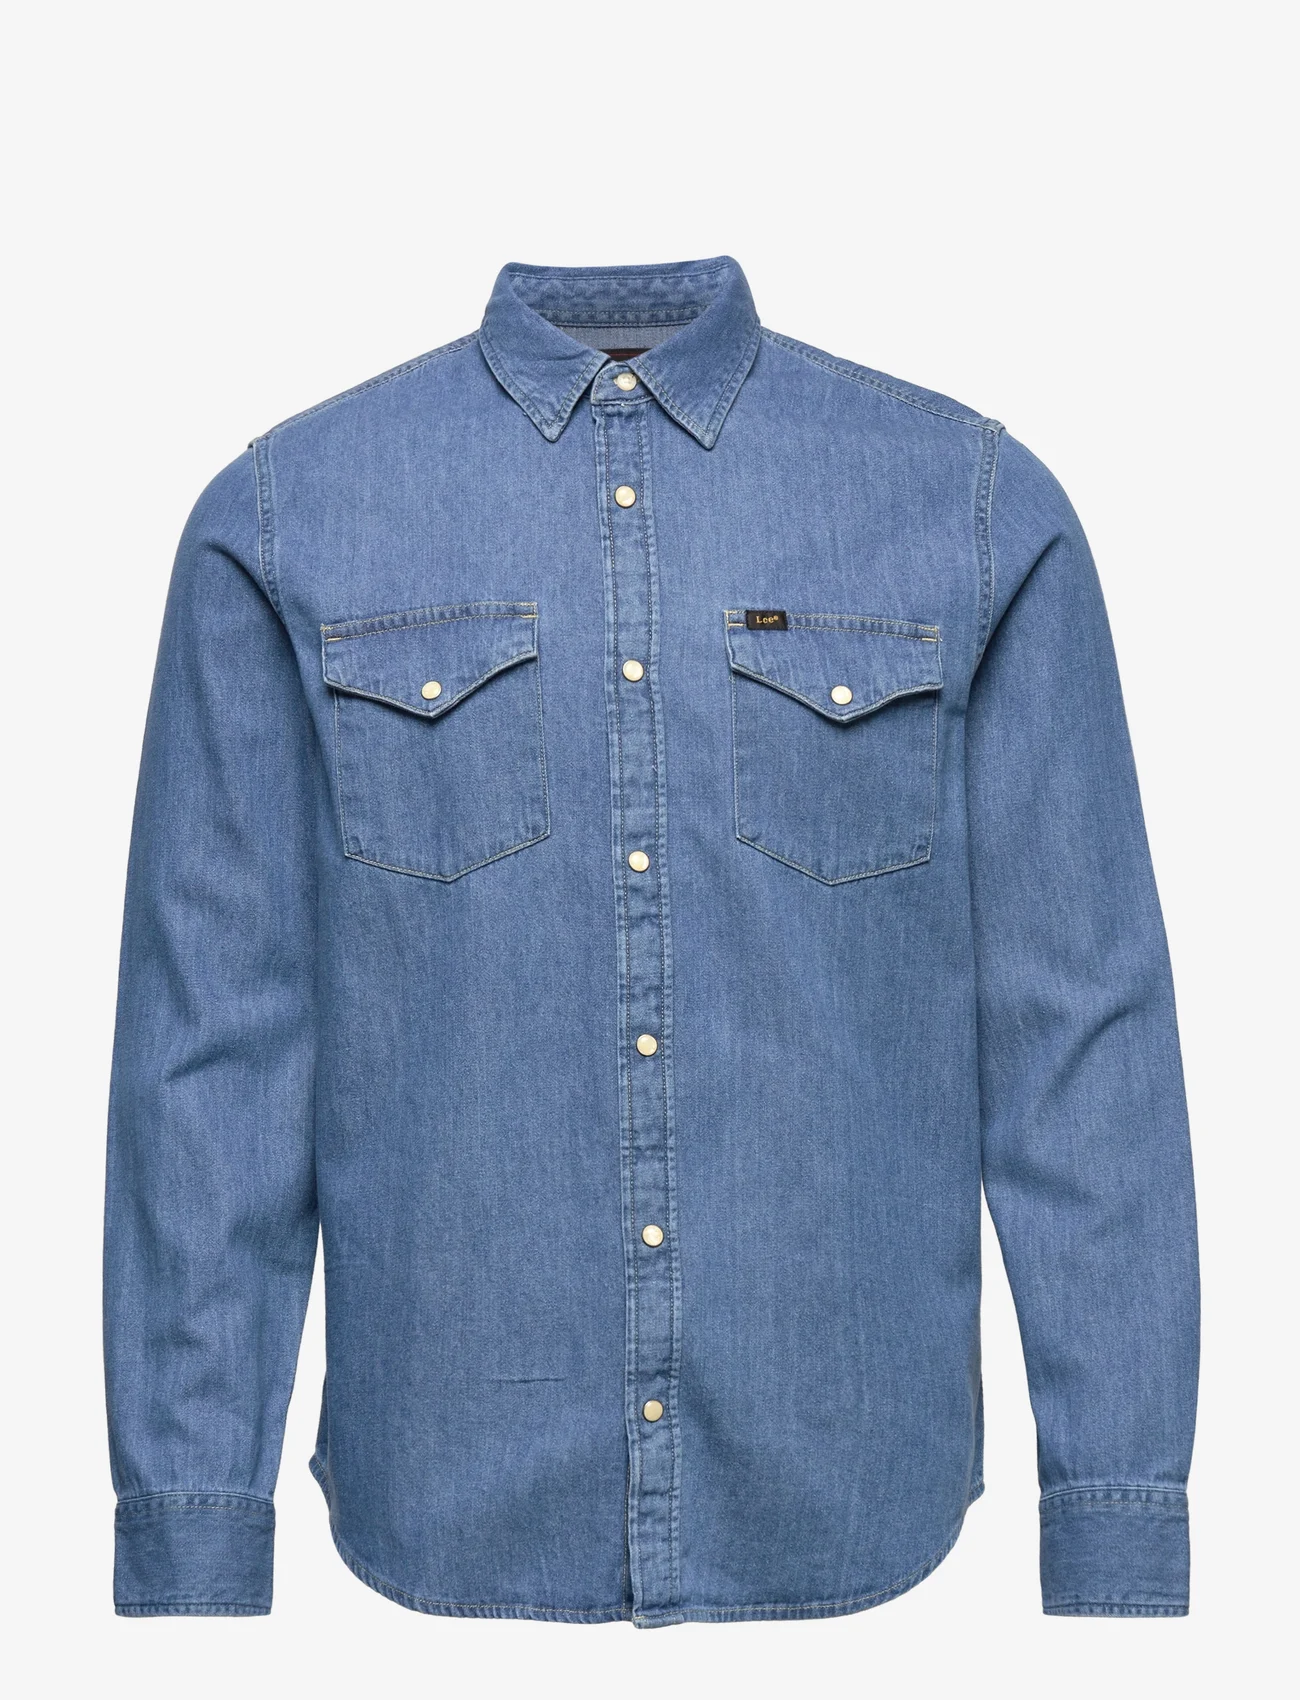 Lee Jeans - REGULAR SHIRT - koszule w kratkę - washed blue - 0